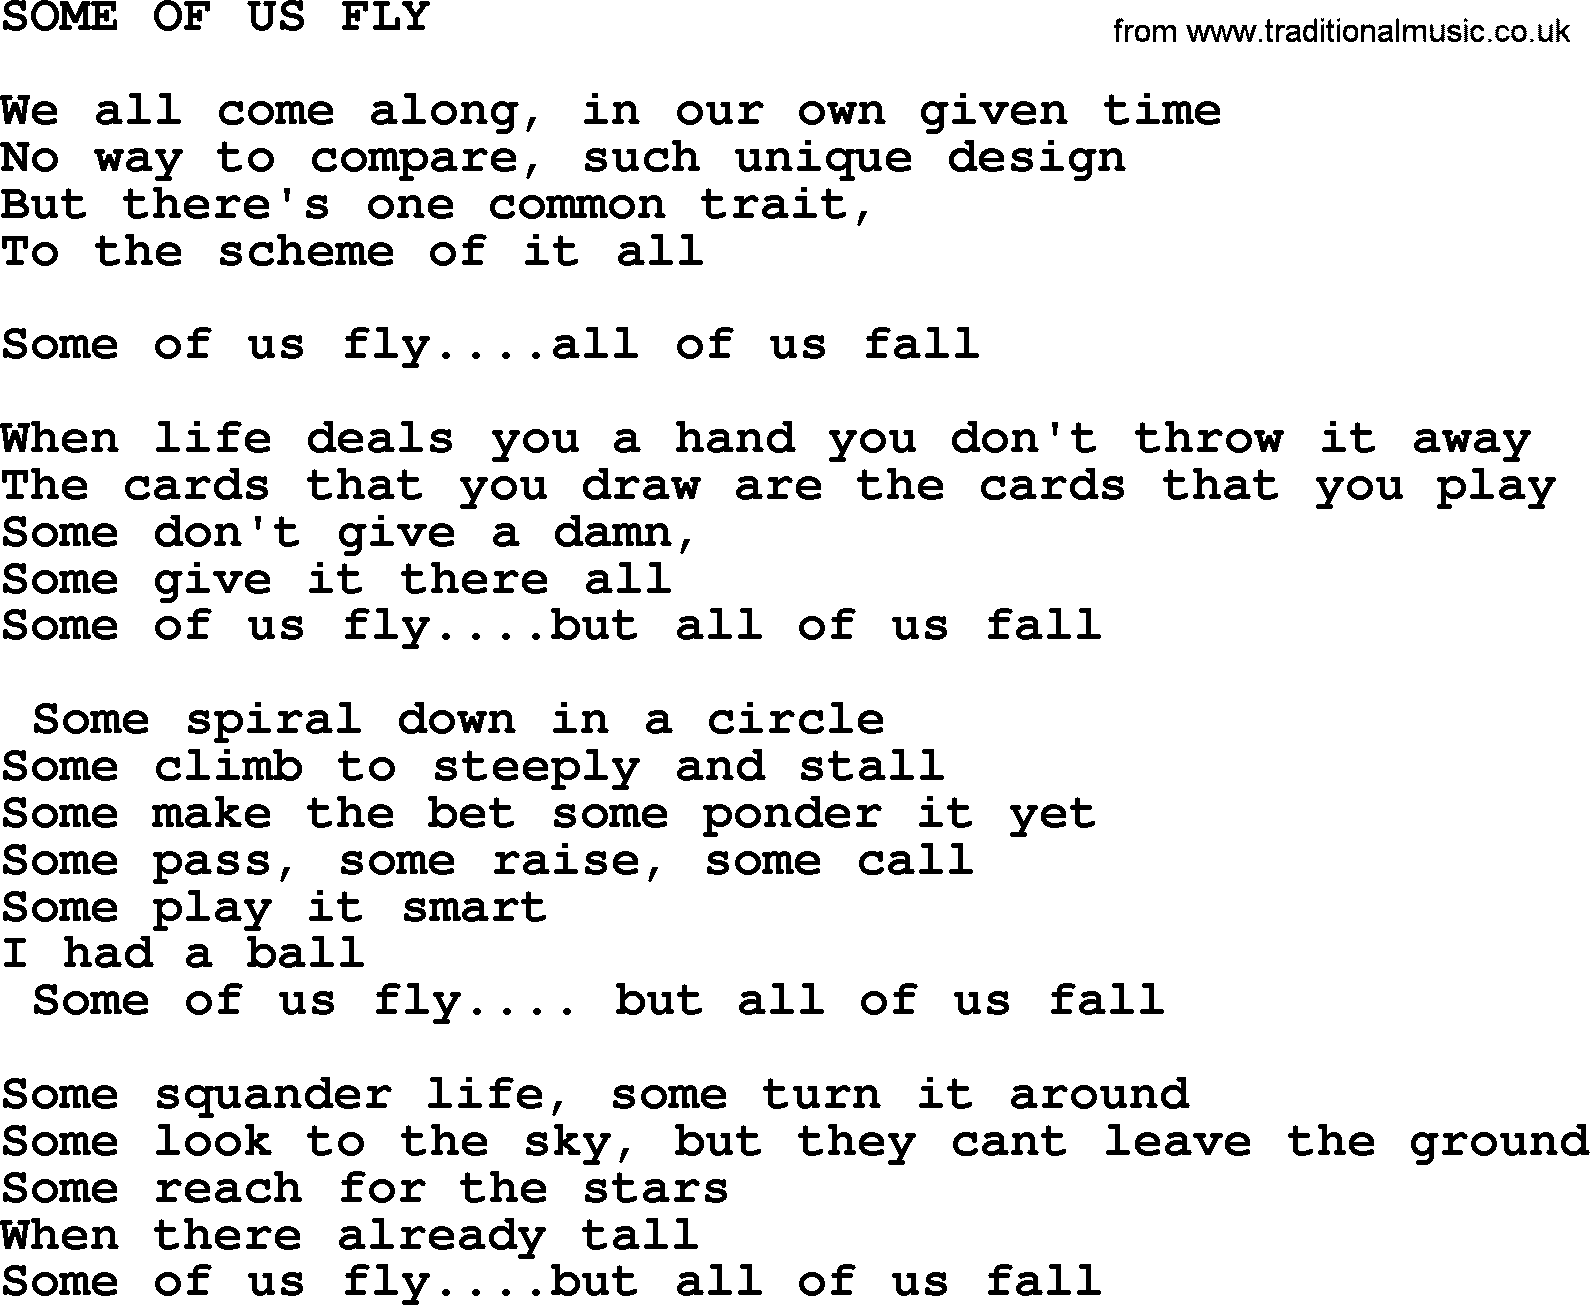 Merle Haggard song: Some Of Us Fly, lyrics.